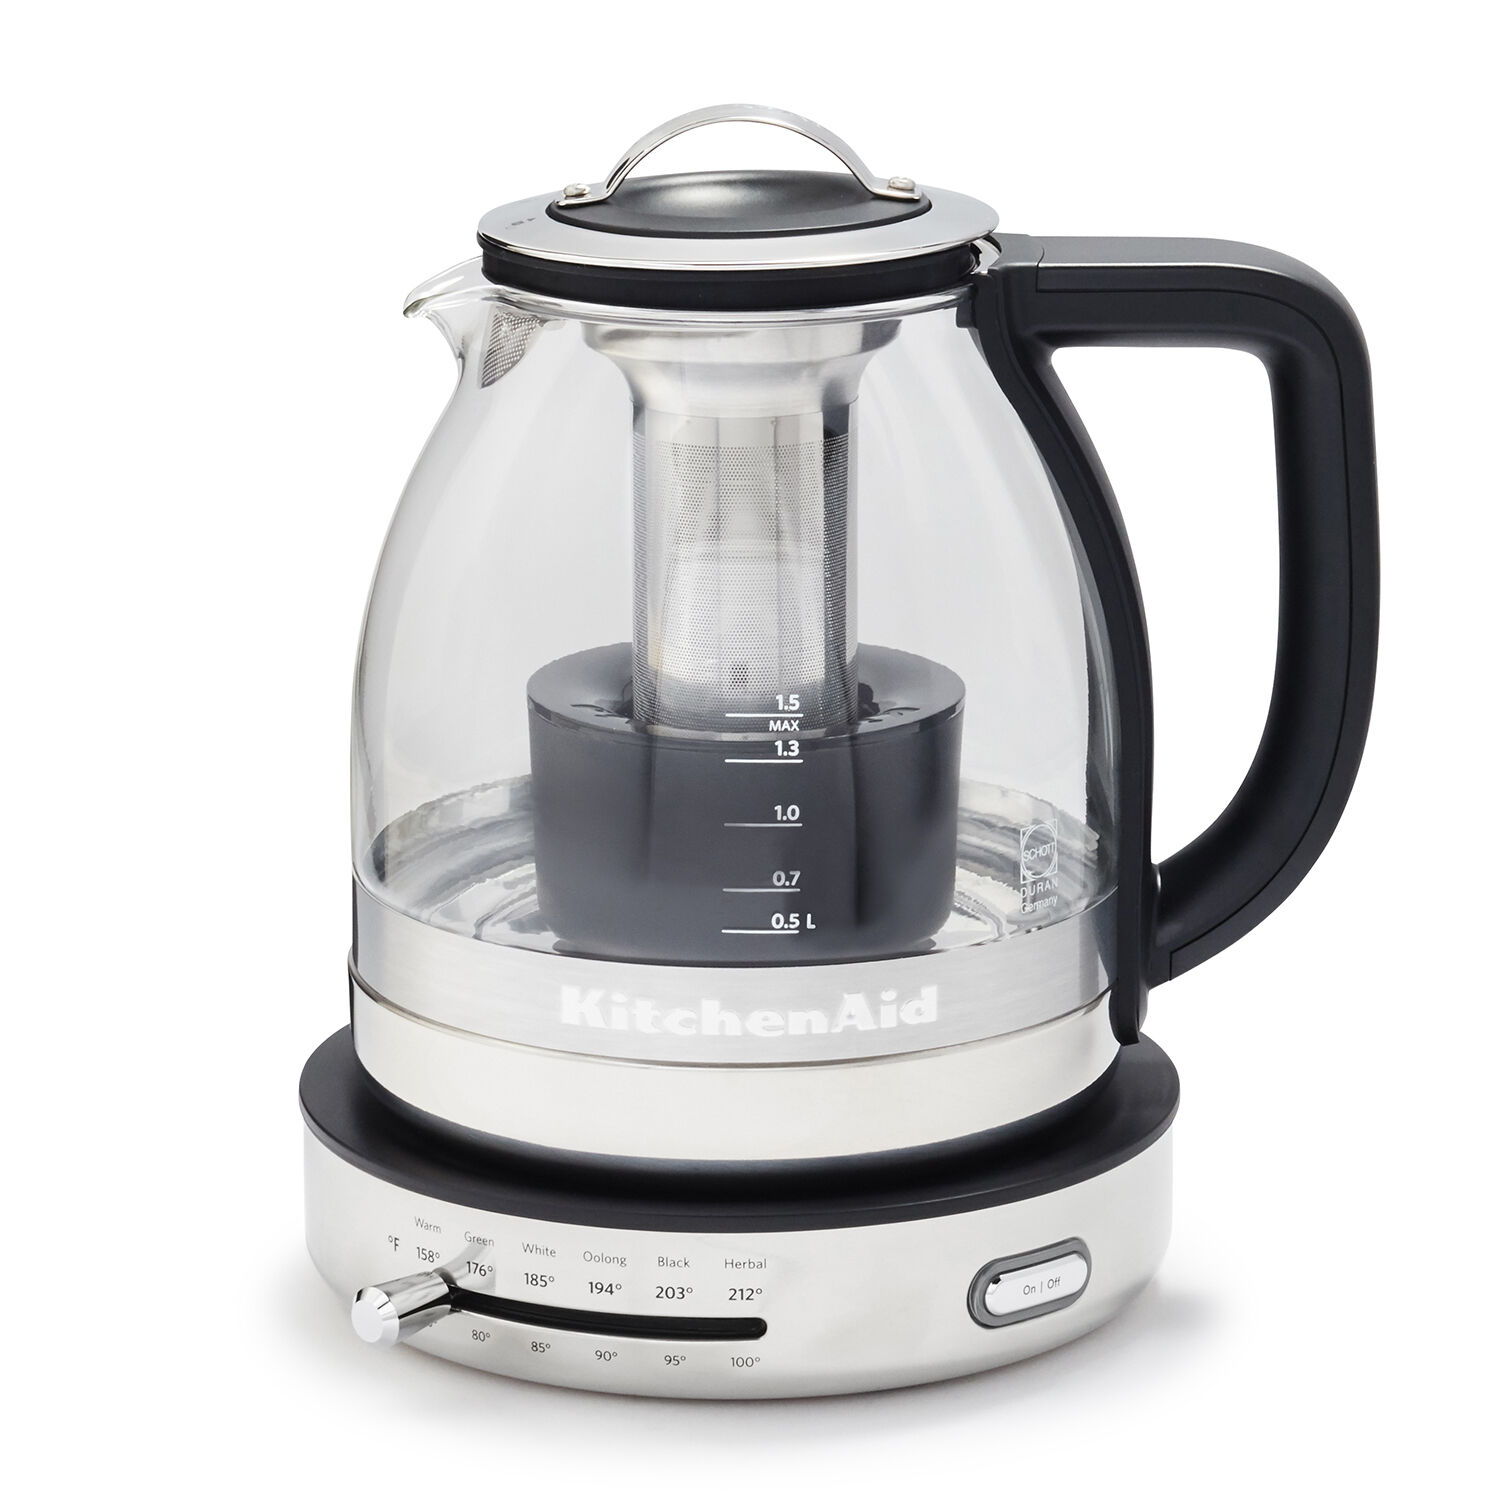 kitchenaid electric tea kettle